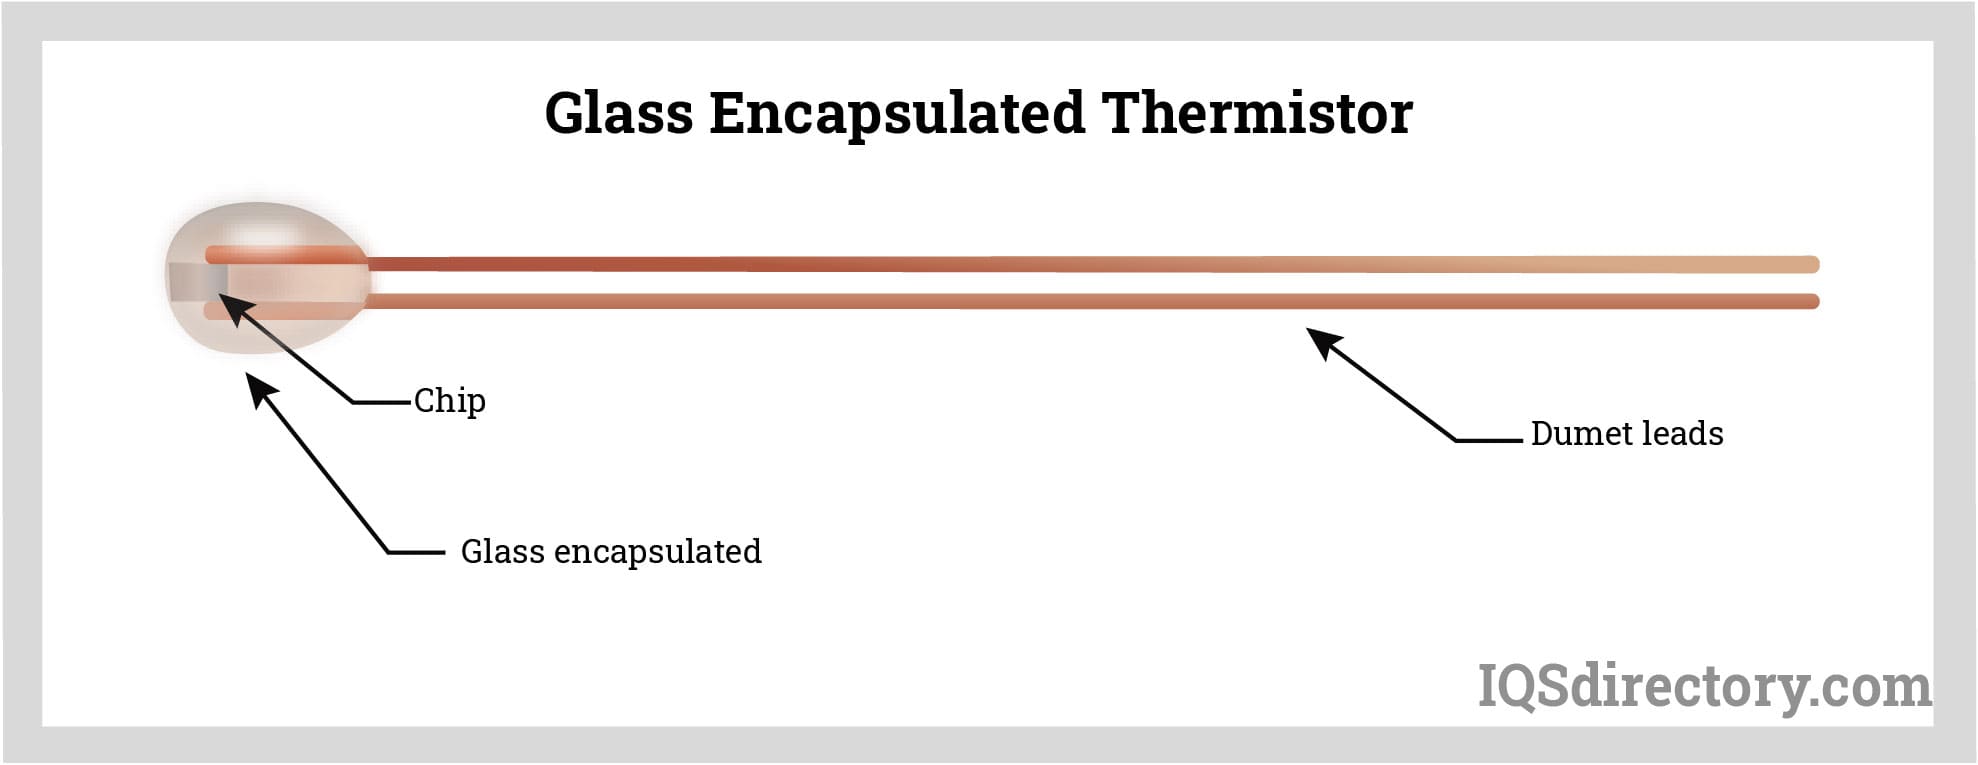 Glass Encapsulated Thermistor